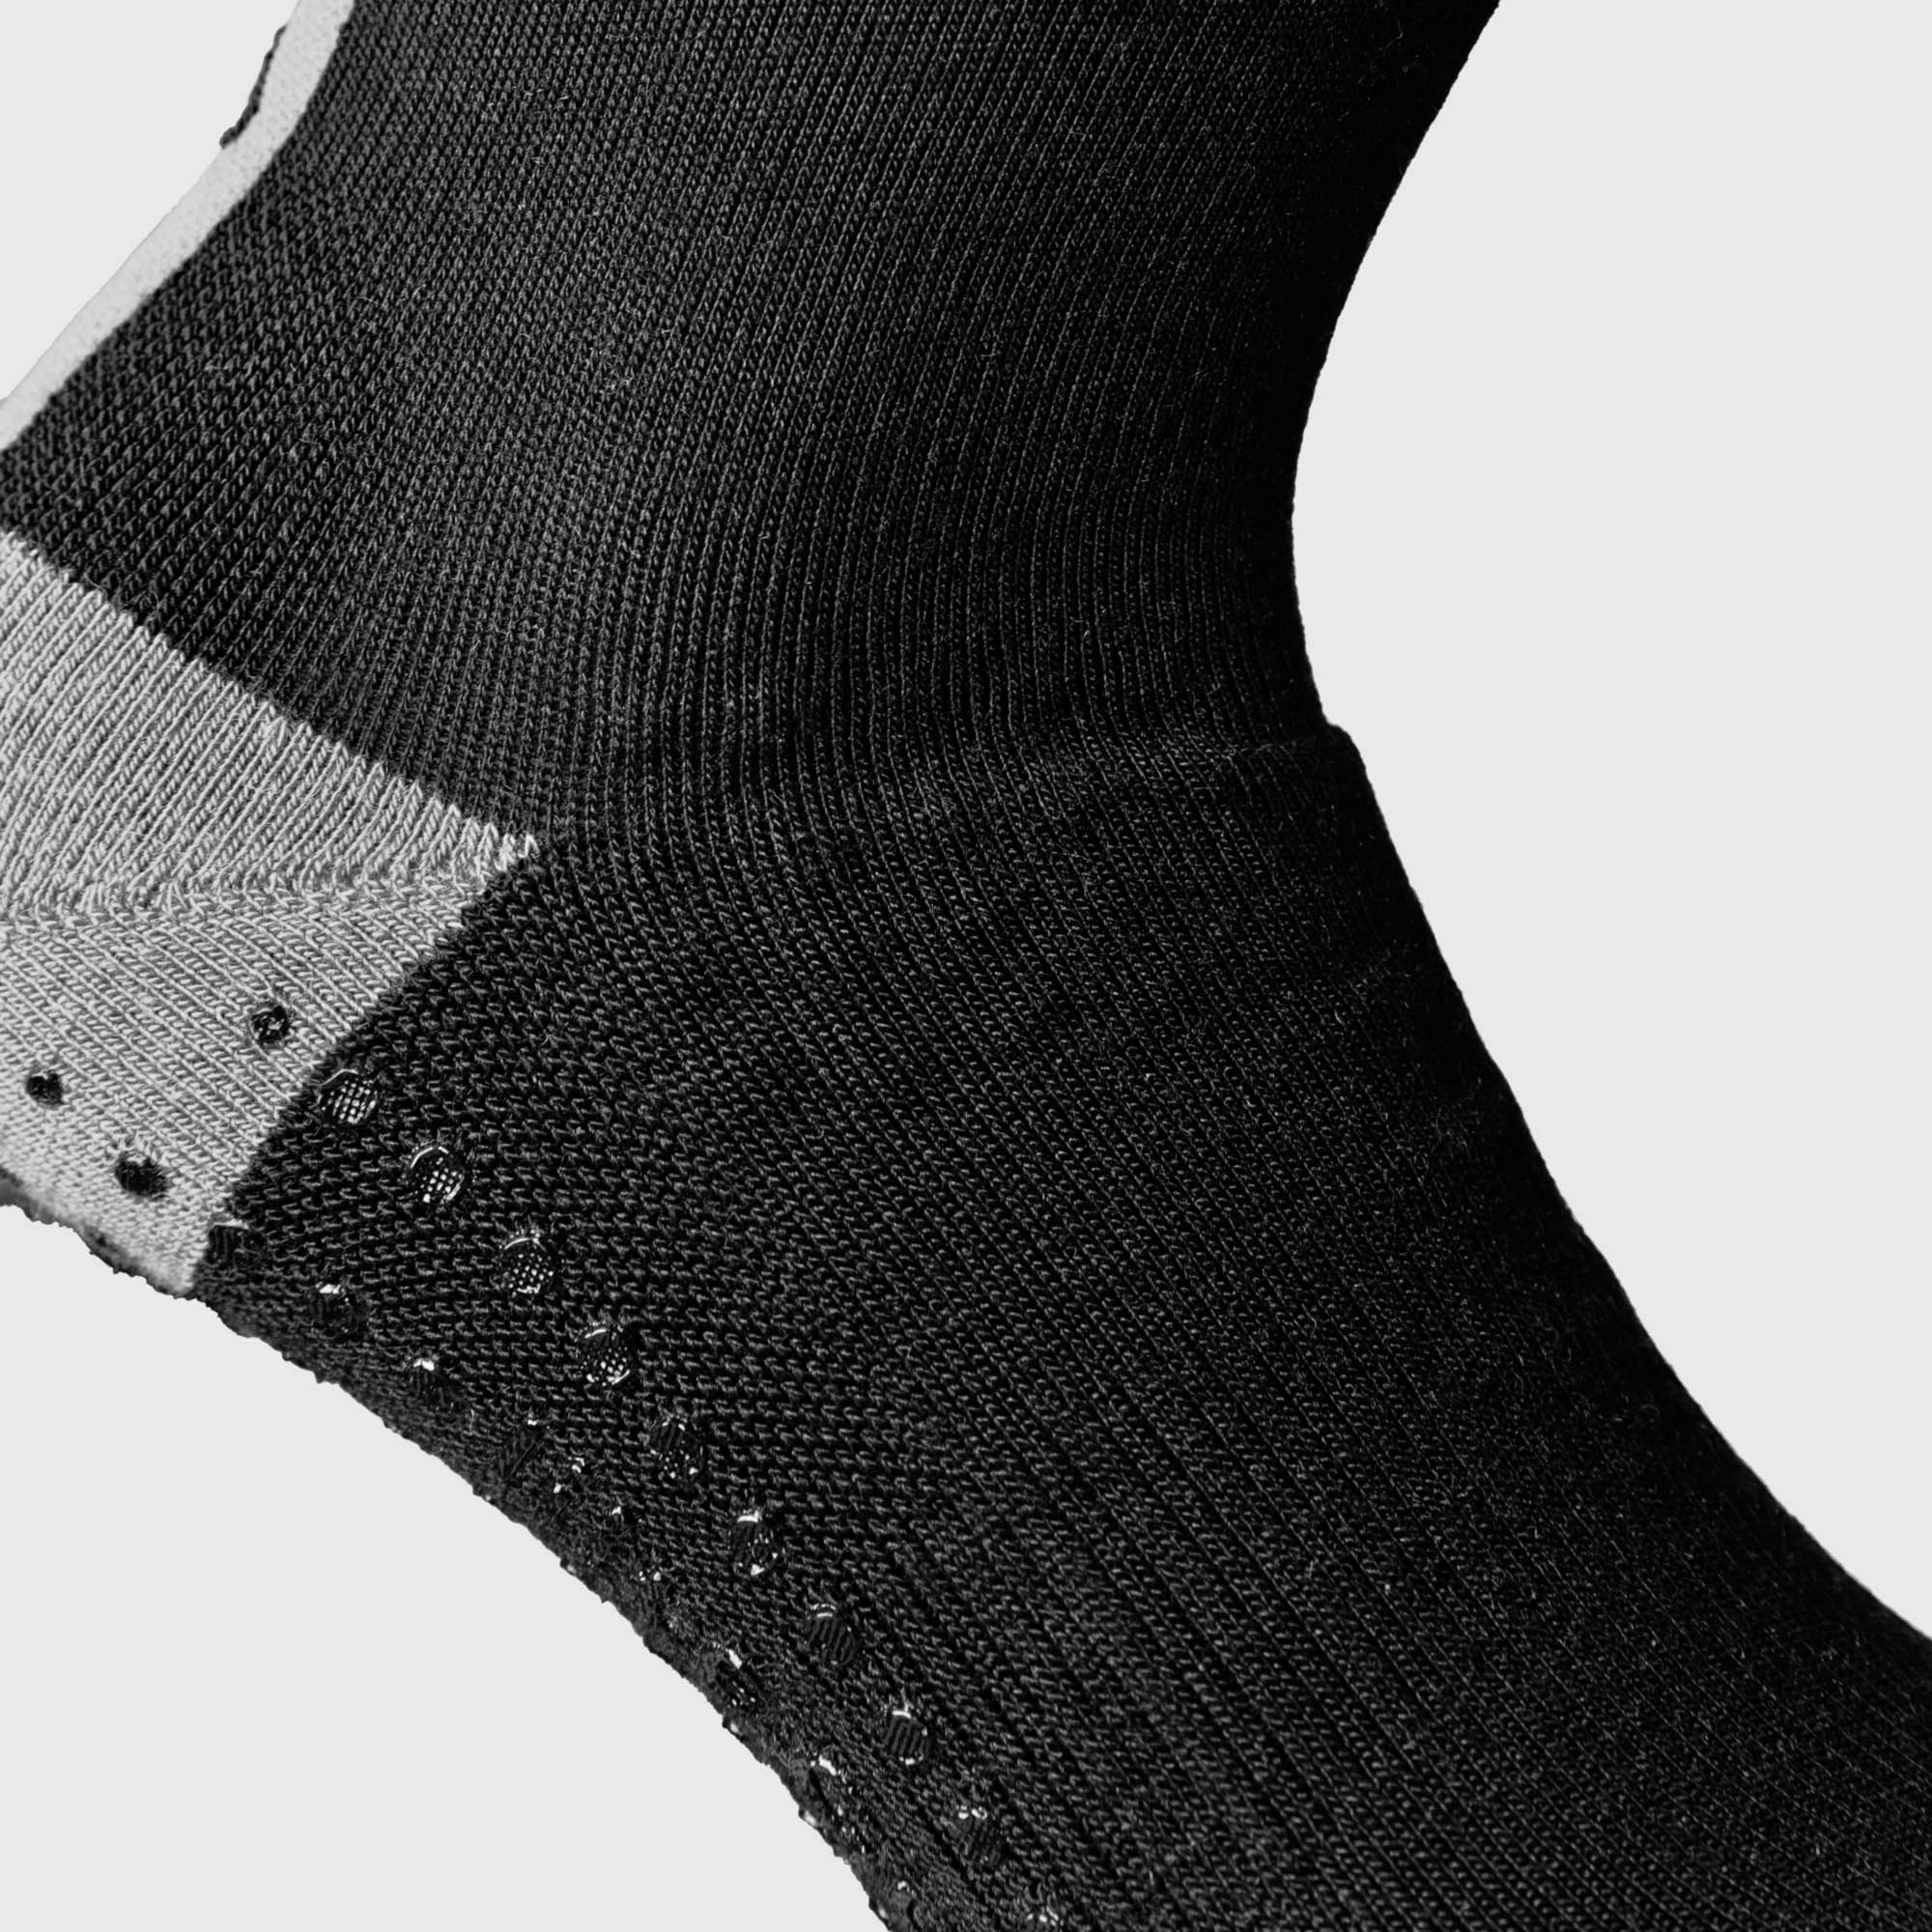 Liiteguard MERINO PRO-TECH SOCK Medium socks Black